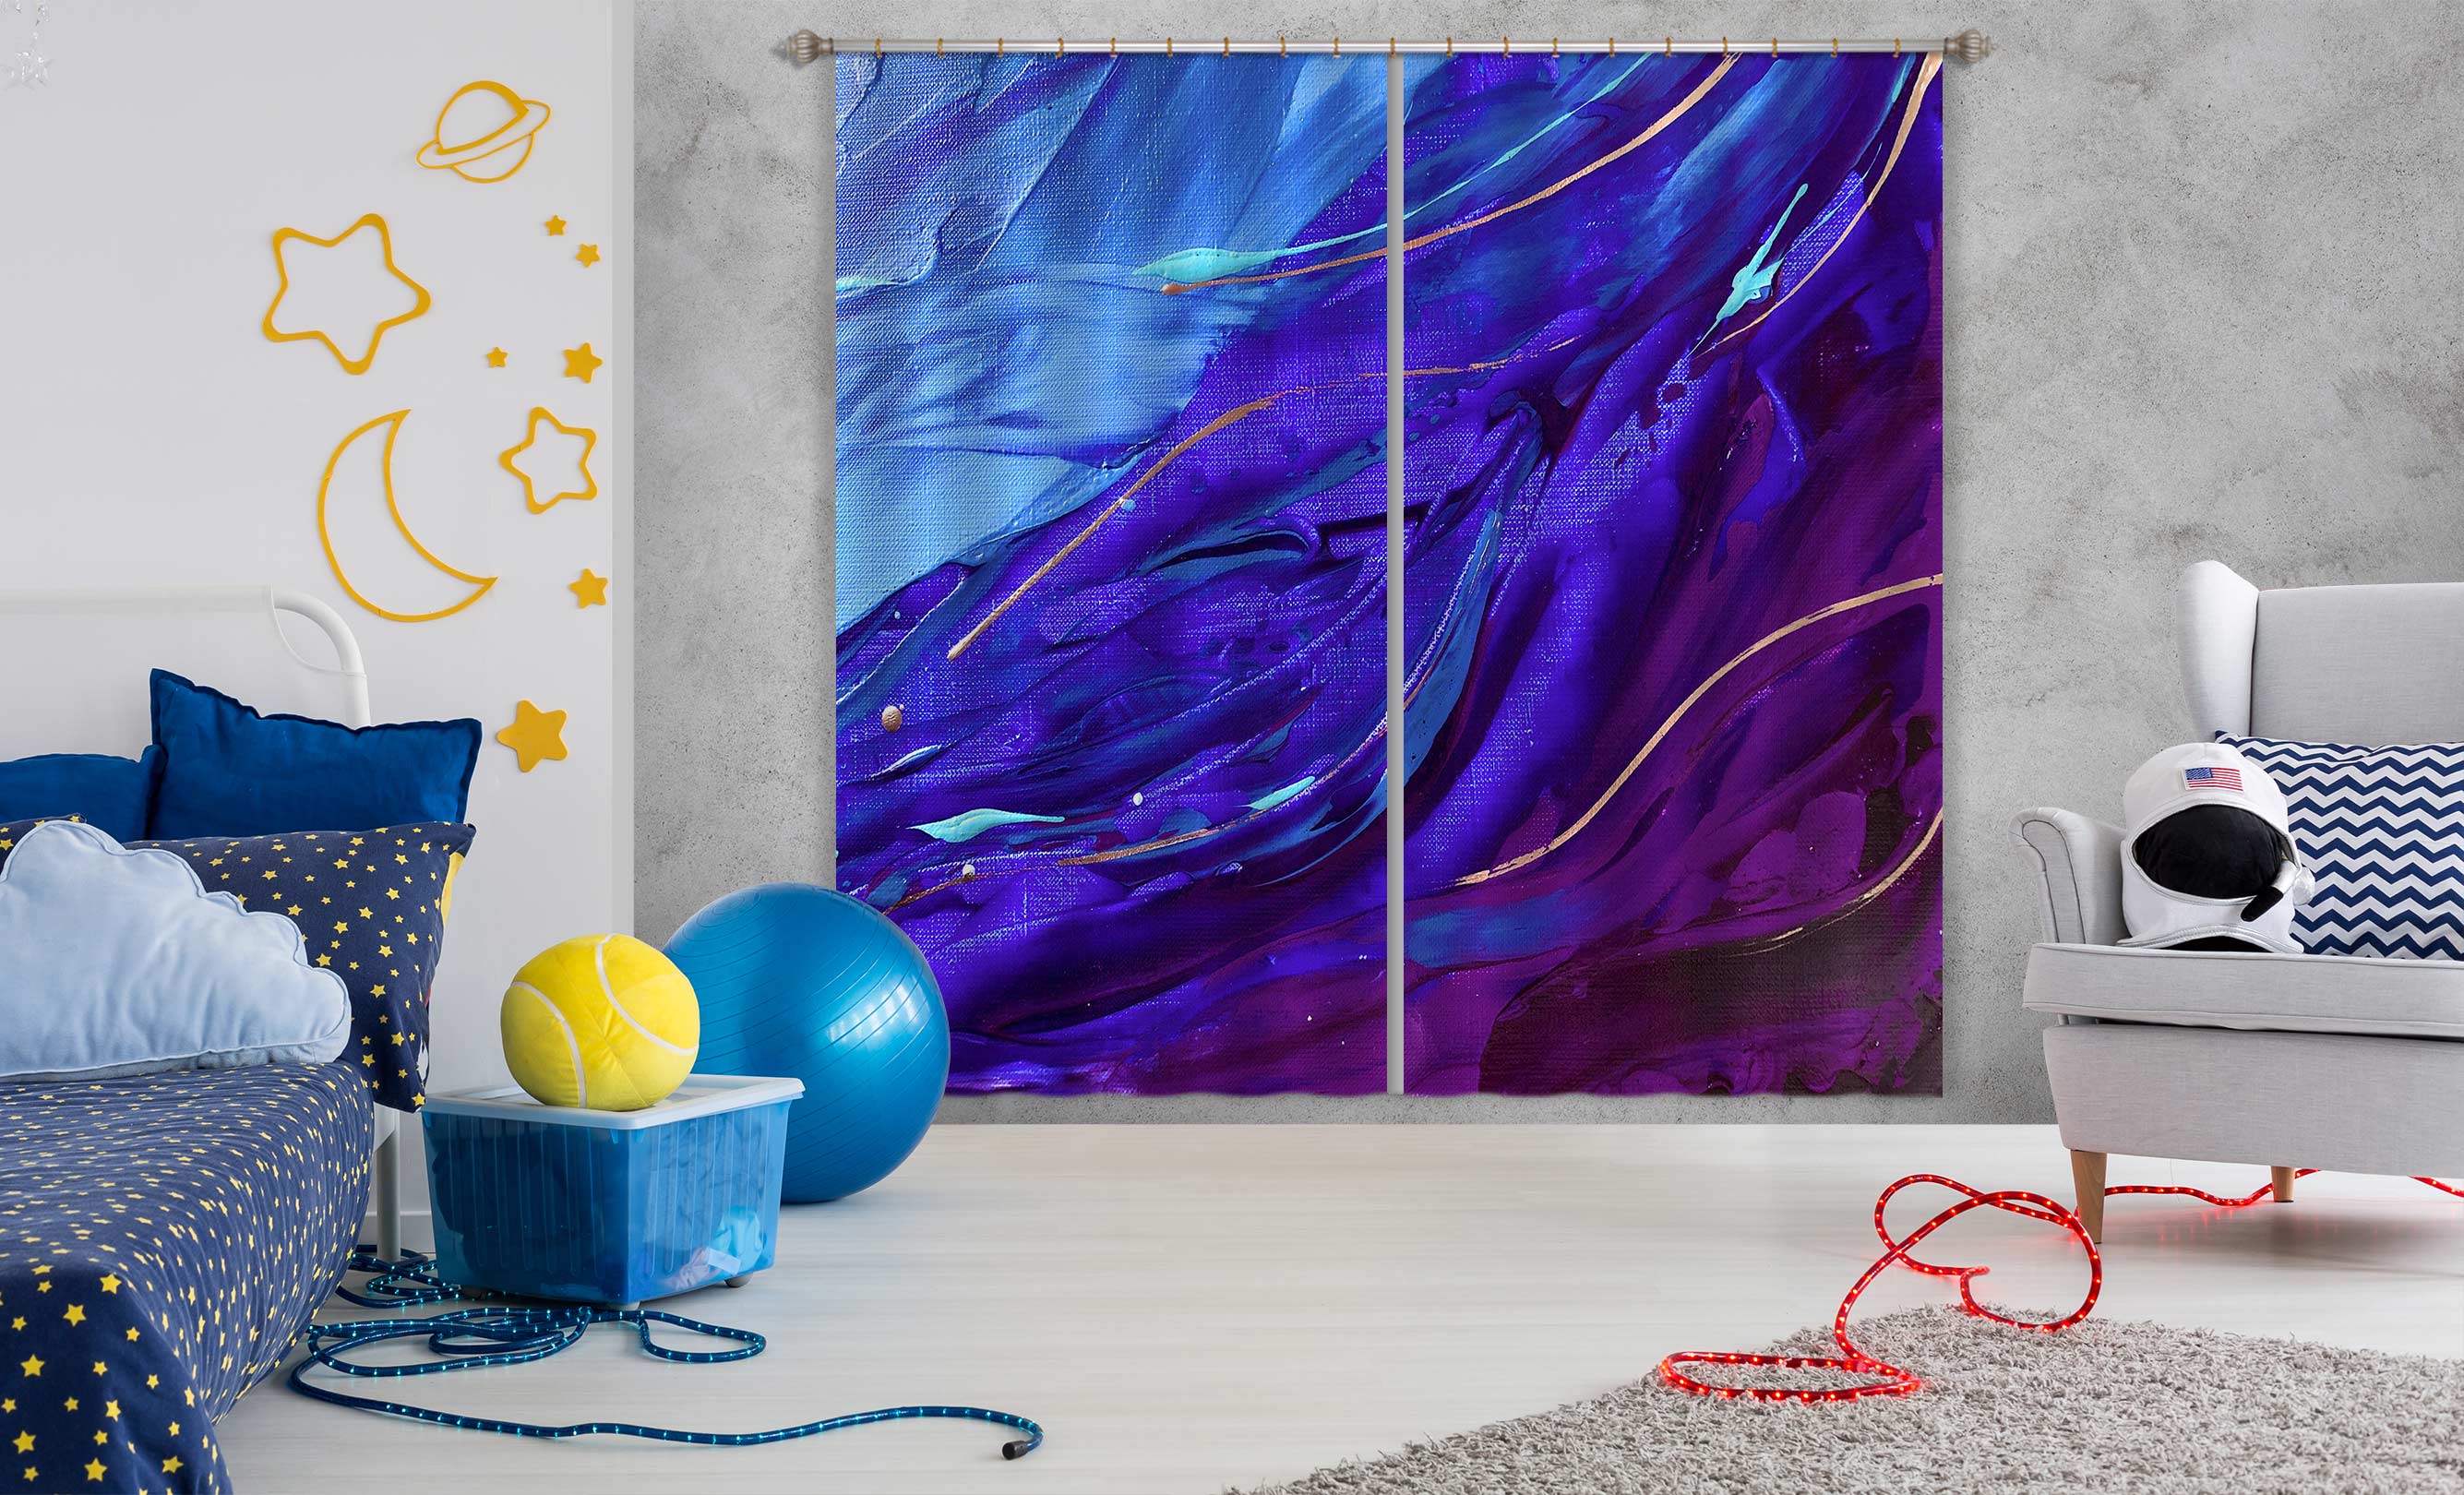 3D Purple Painting 326 Skromova Marina Curtain Curtains Drapes